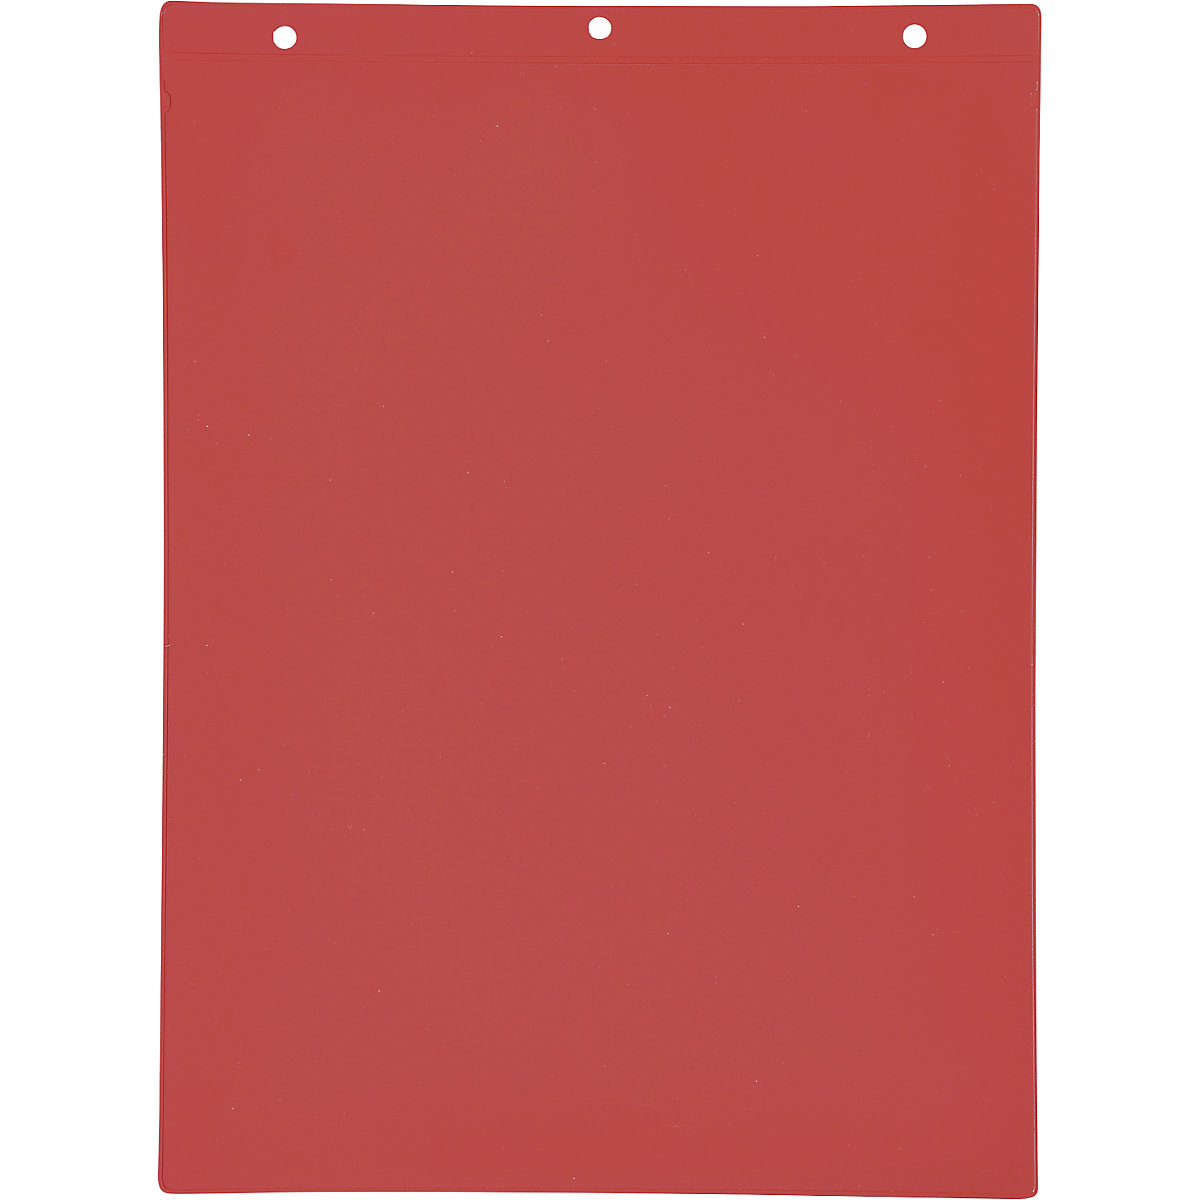 Beschriftungstaschen mit Aufhängelochung, Hochformat DIN A4, rot, VE 50 Stk